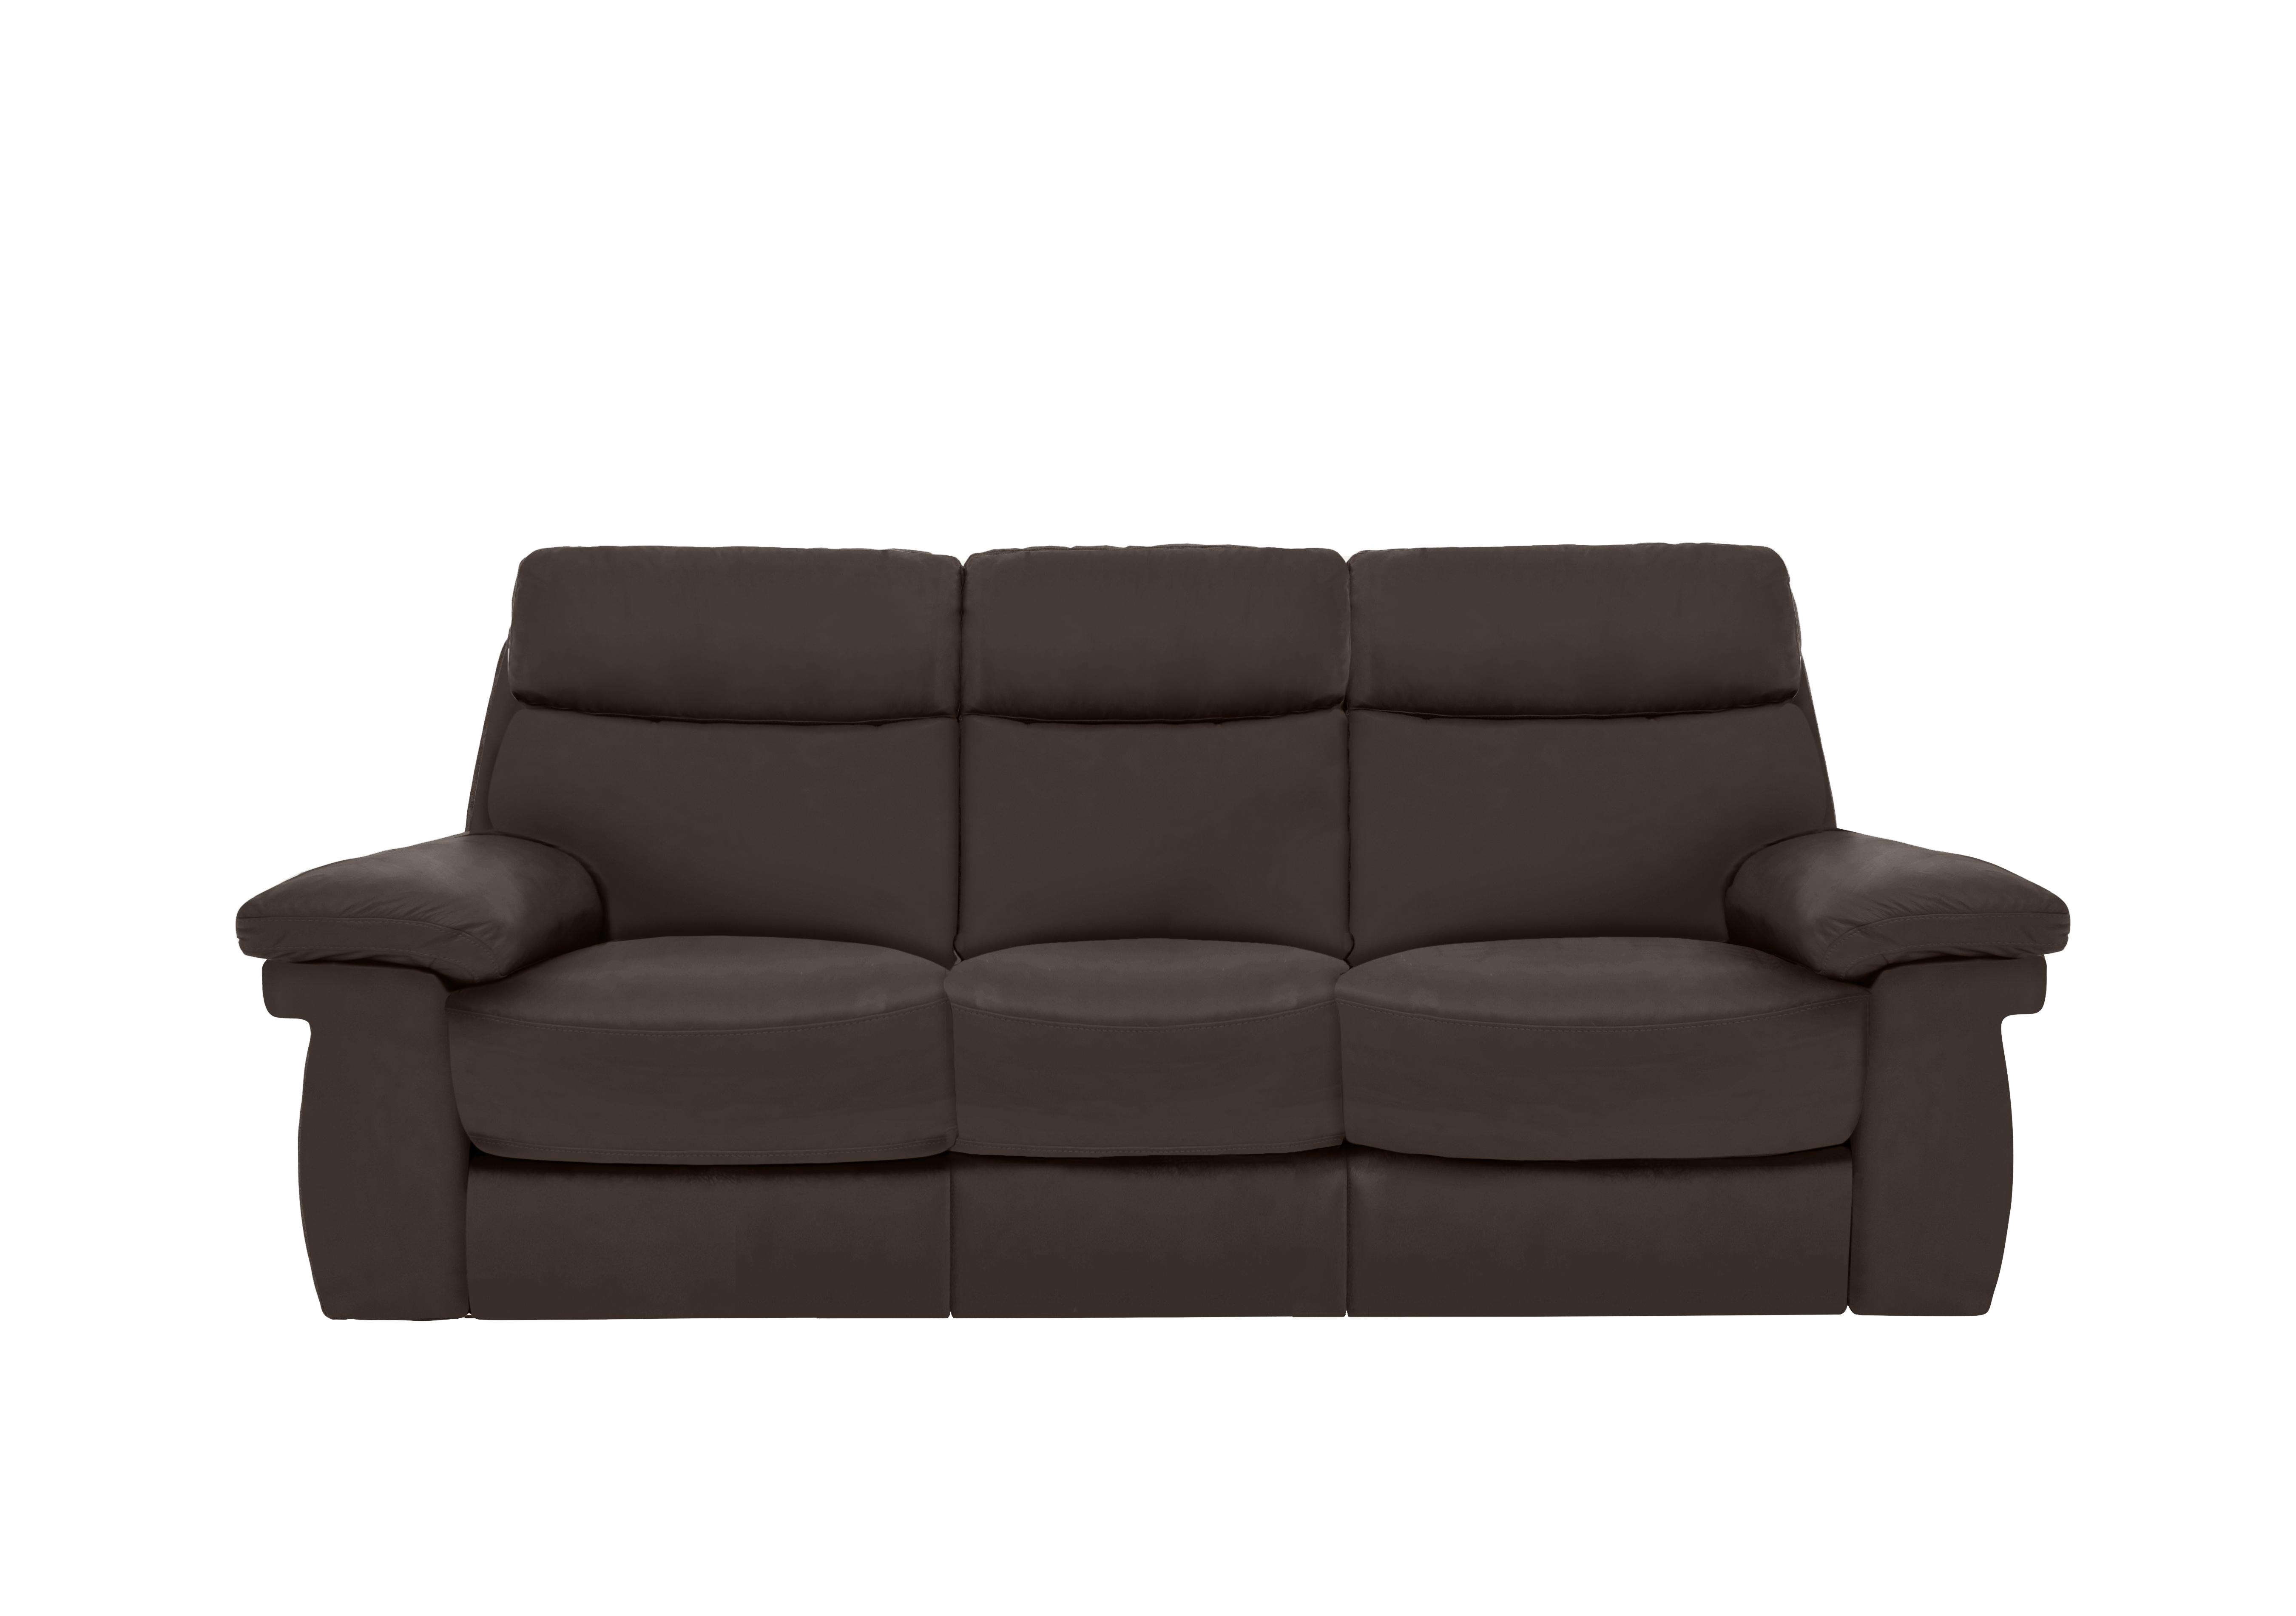 Serene 3 Seater Leather Sofa in Bx-037c Walnut on Furniture Village